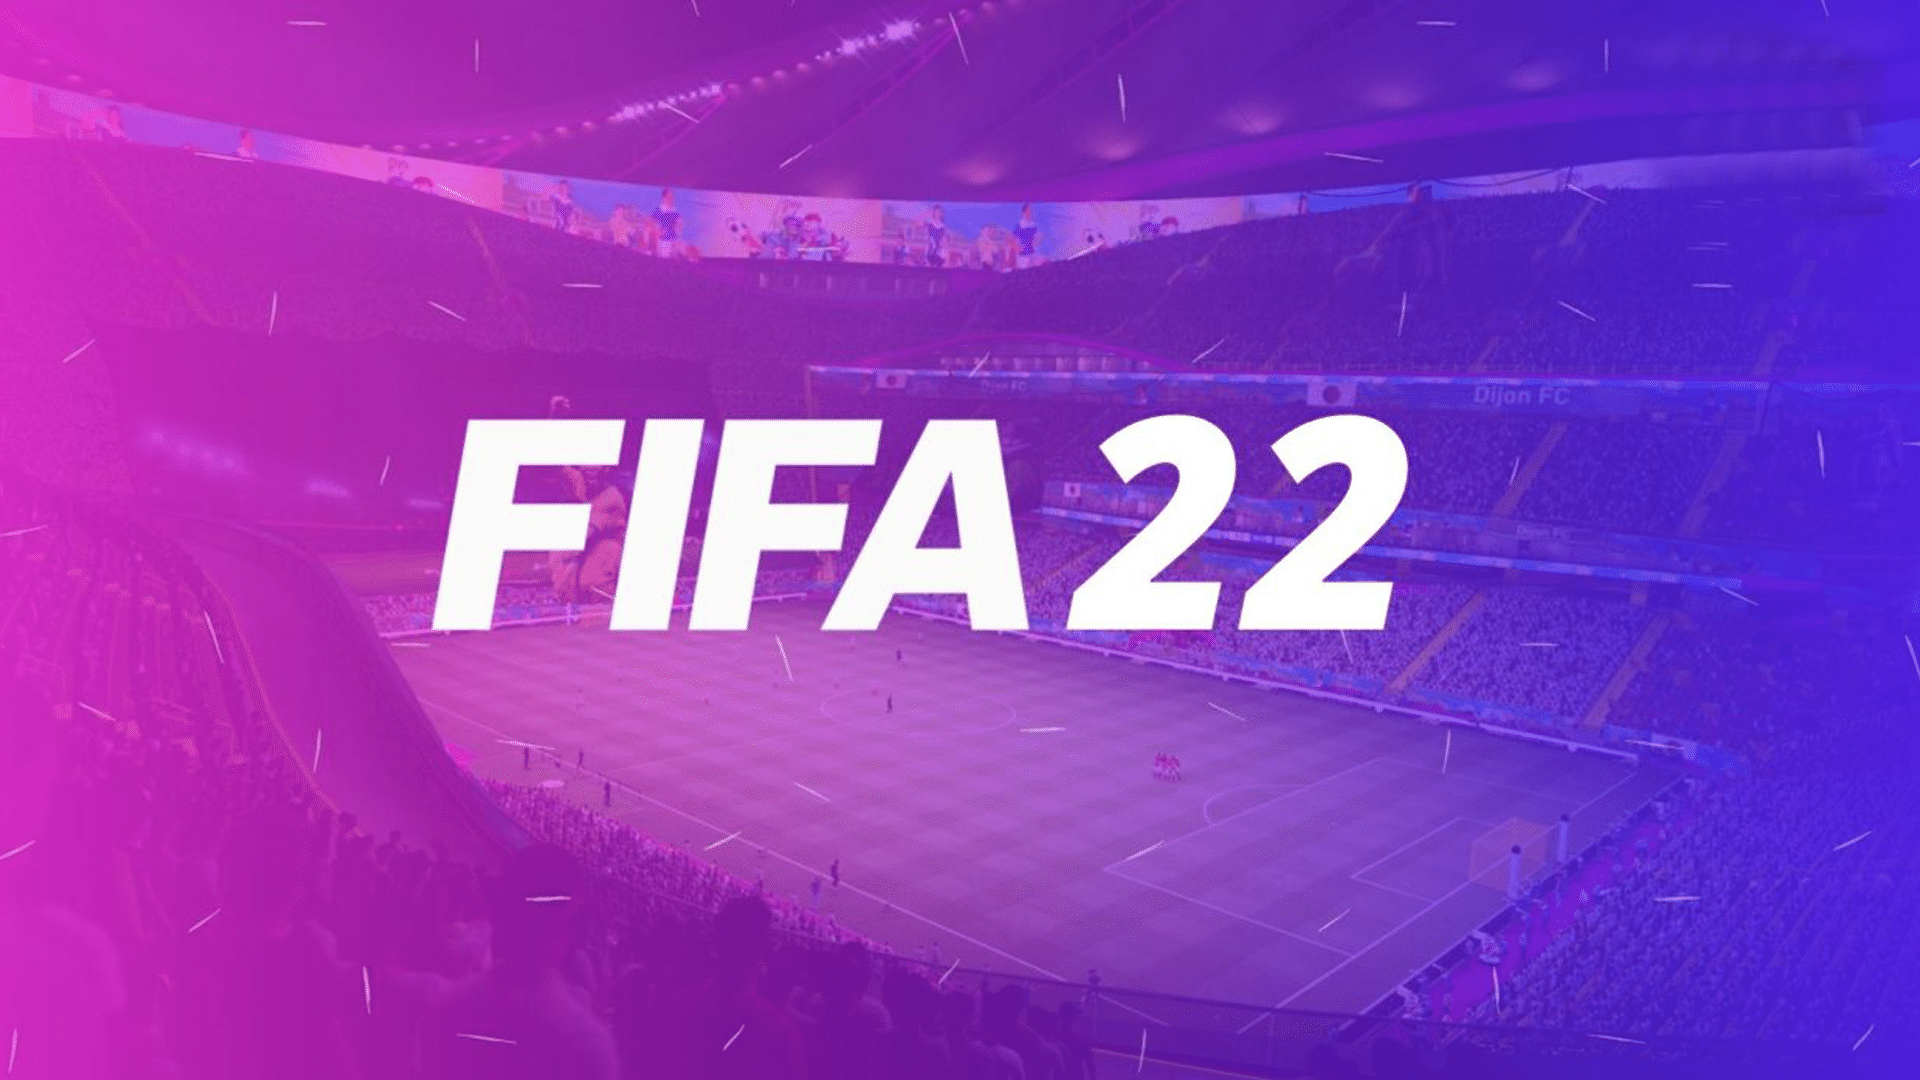 FIFA 22 / English version/ OFFLINE ACCOUNT / PayPal